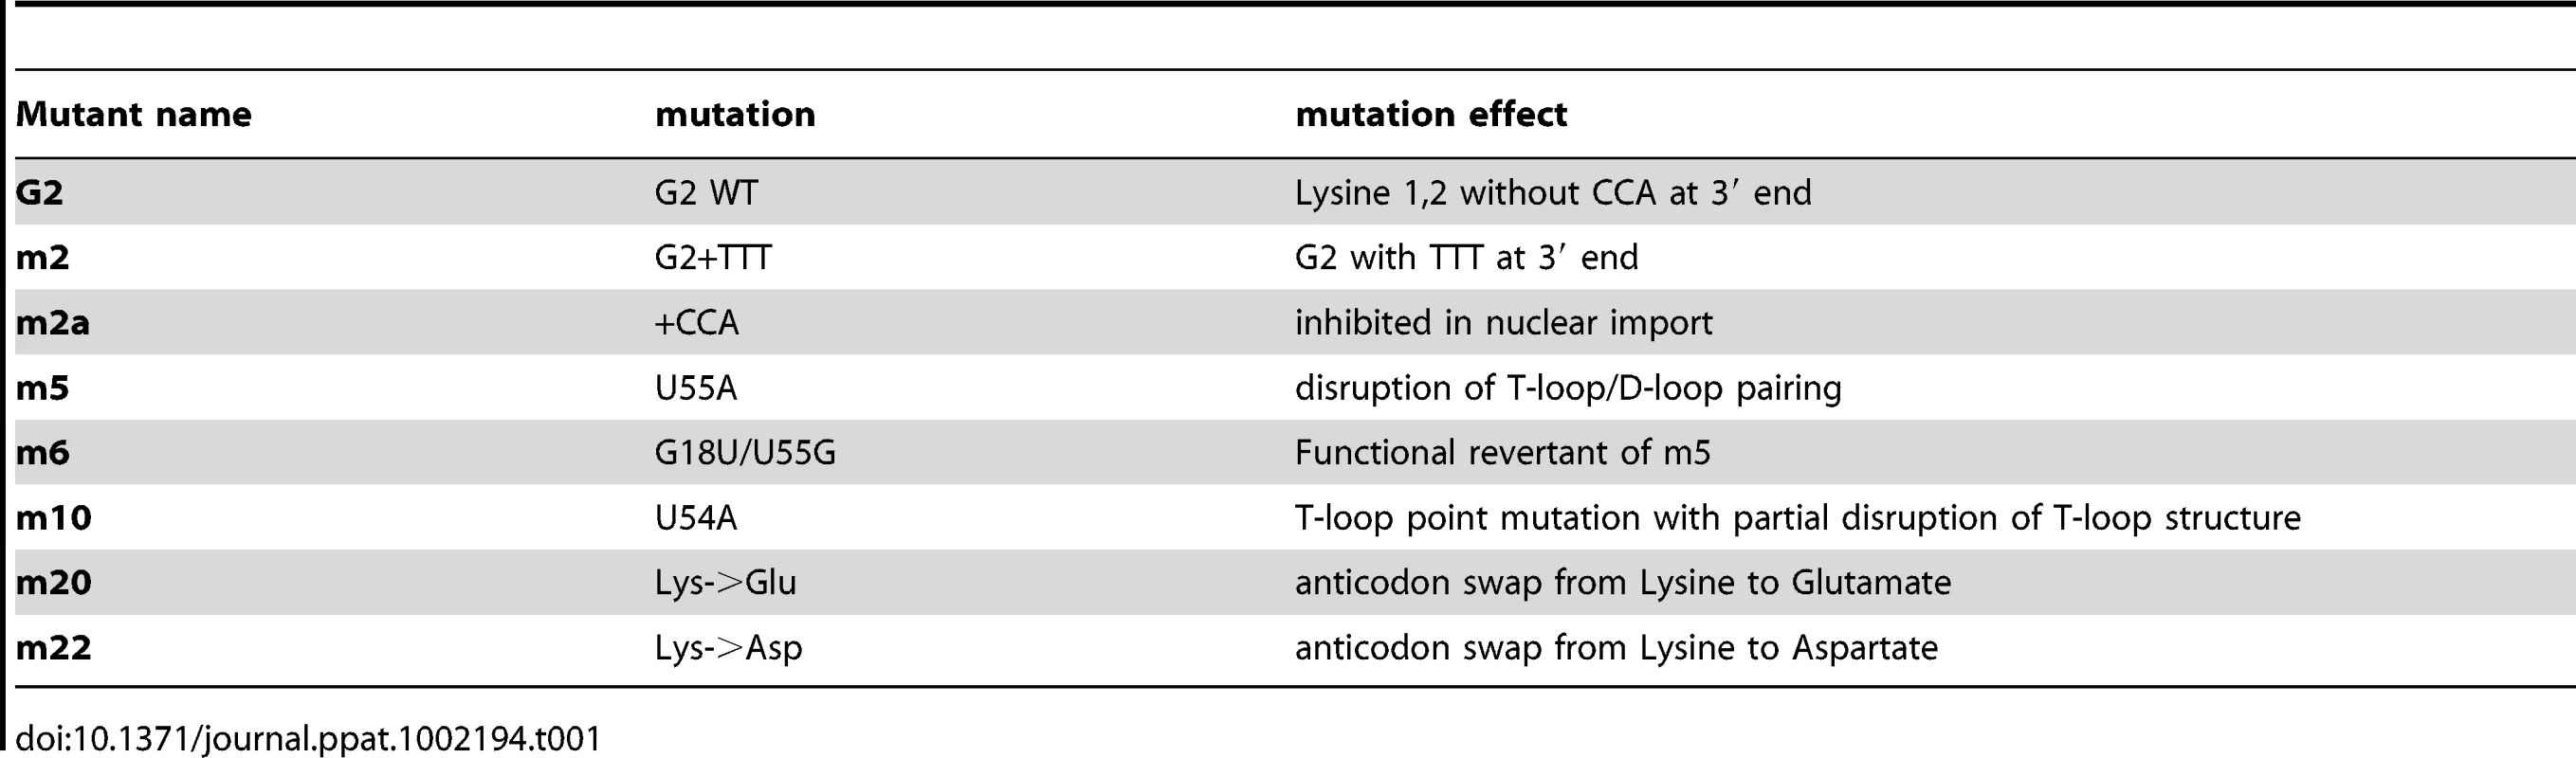 tRNA mutants generated and their characteristics.